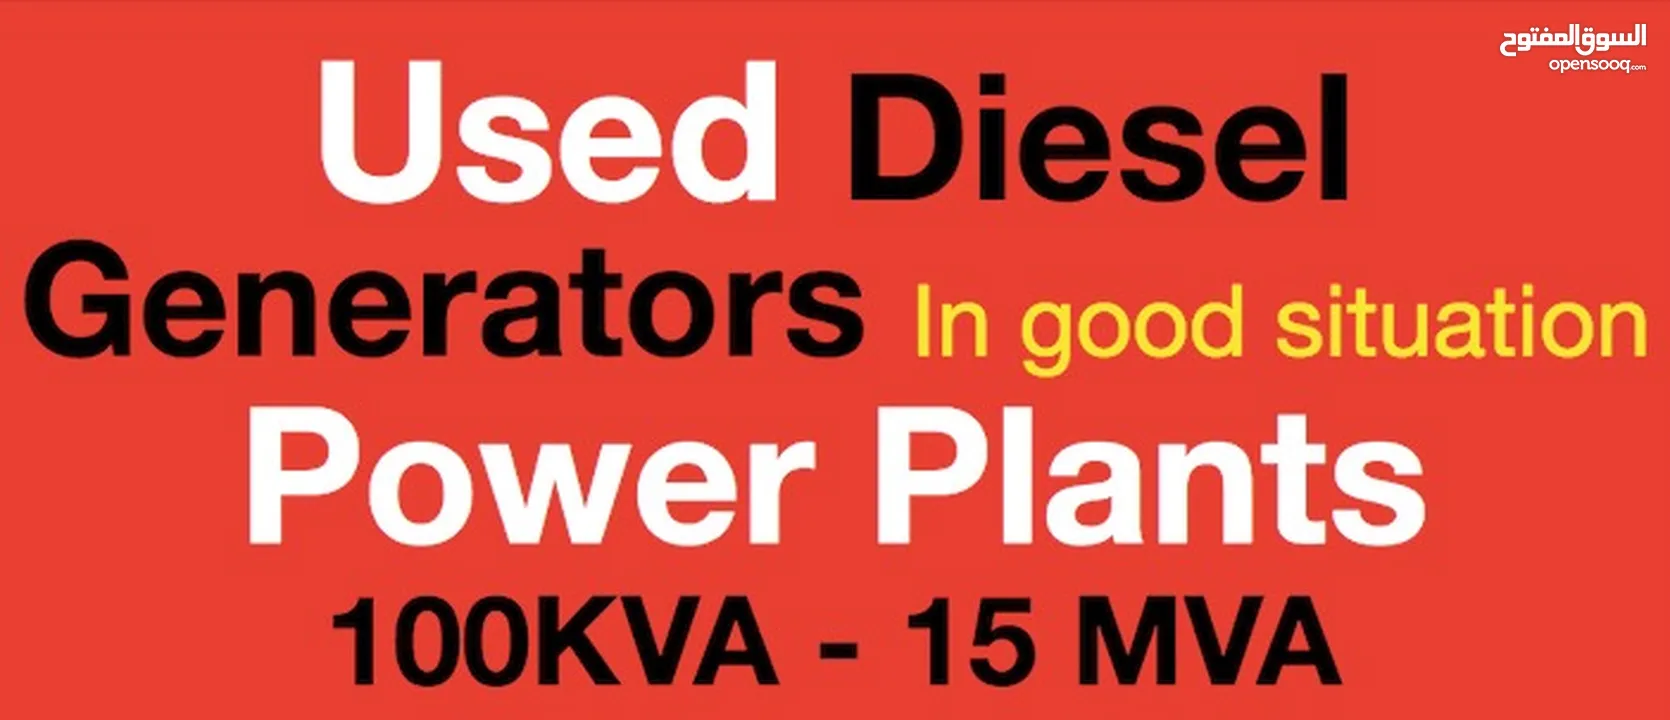 We are Interested to Buy 60kv &100kv brand new Diesel Generator